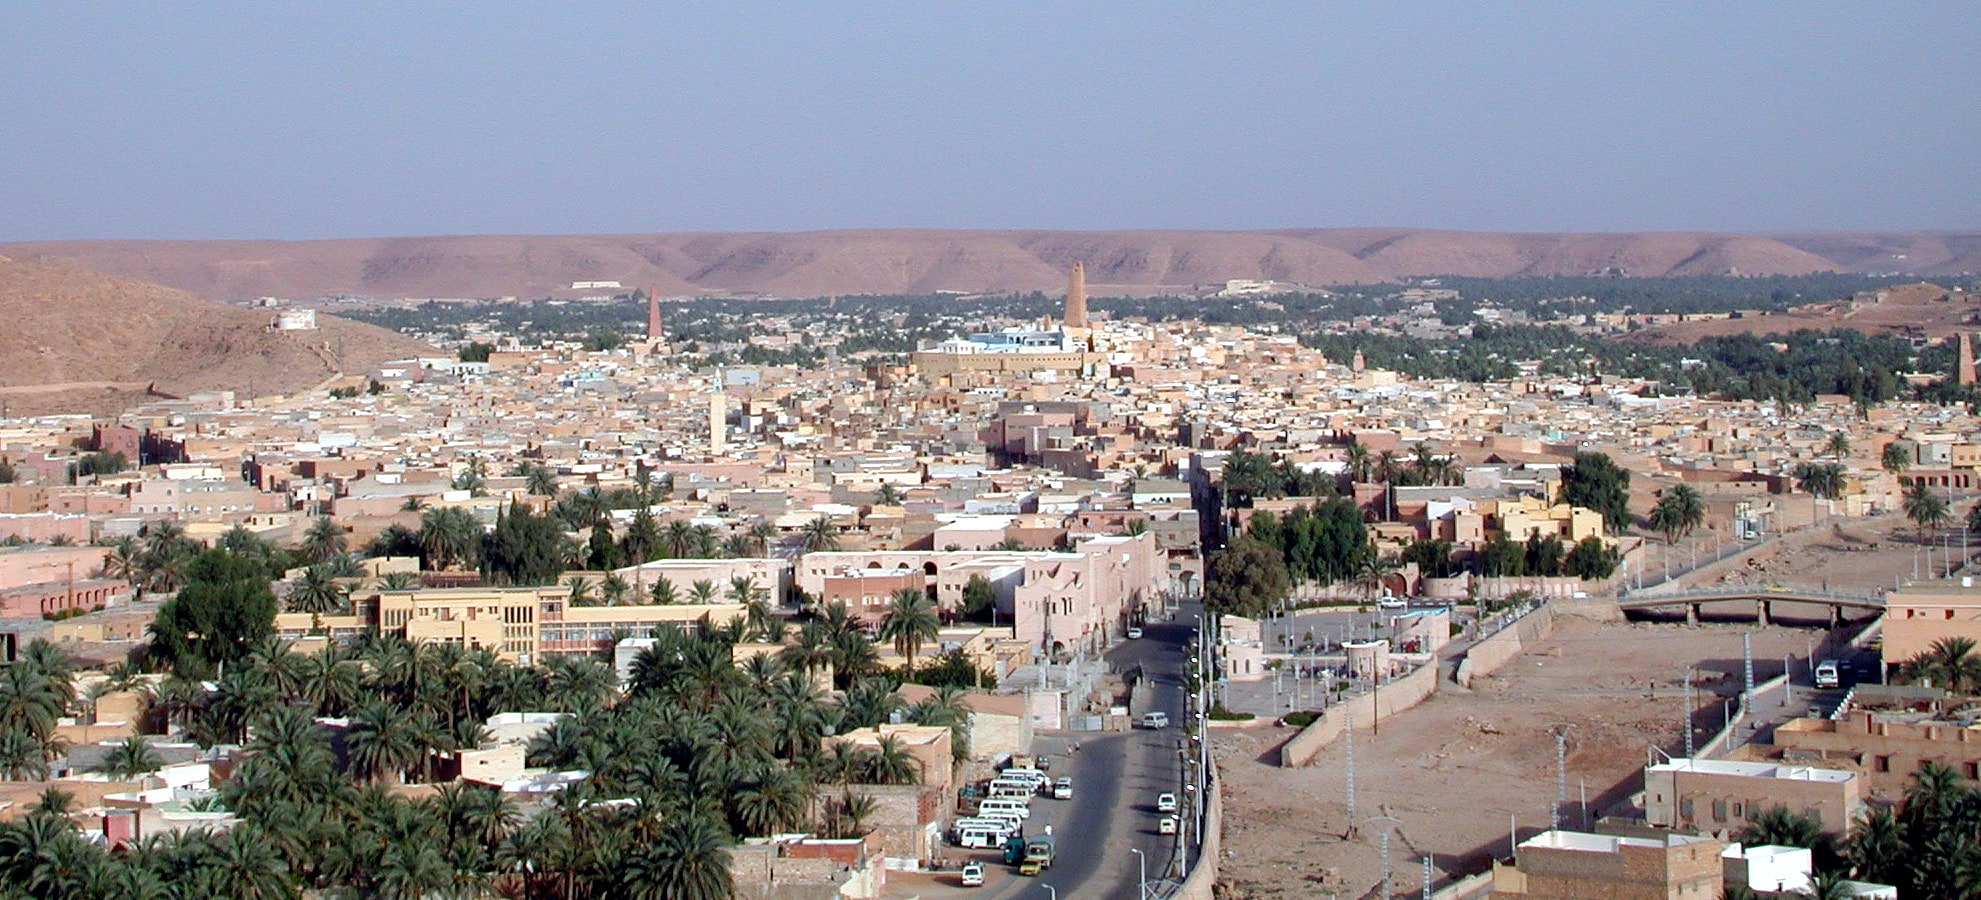 Ghardaïa, Algeria